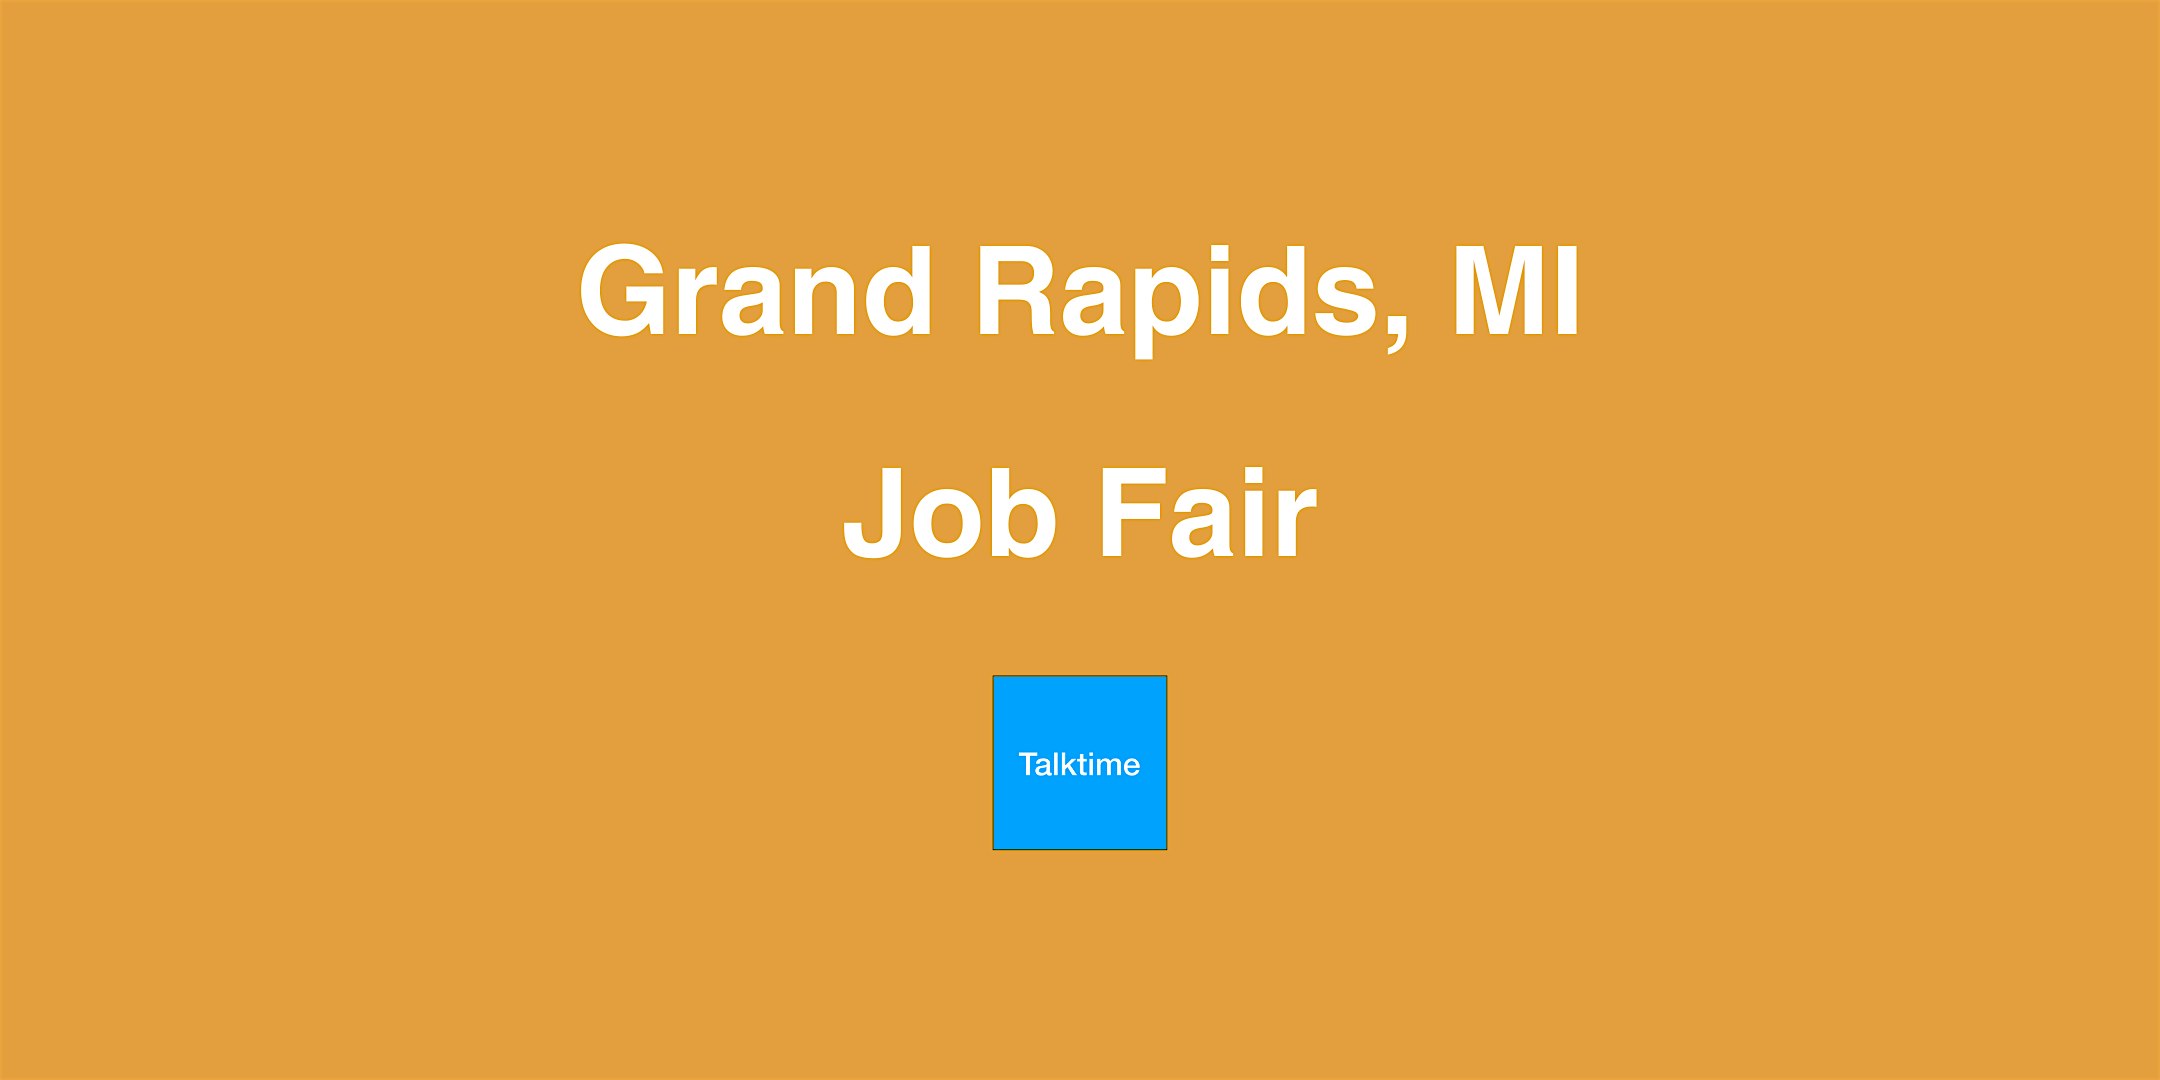 Job Fair - Grand Rapids